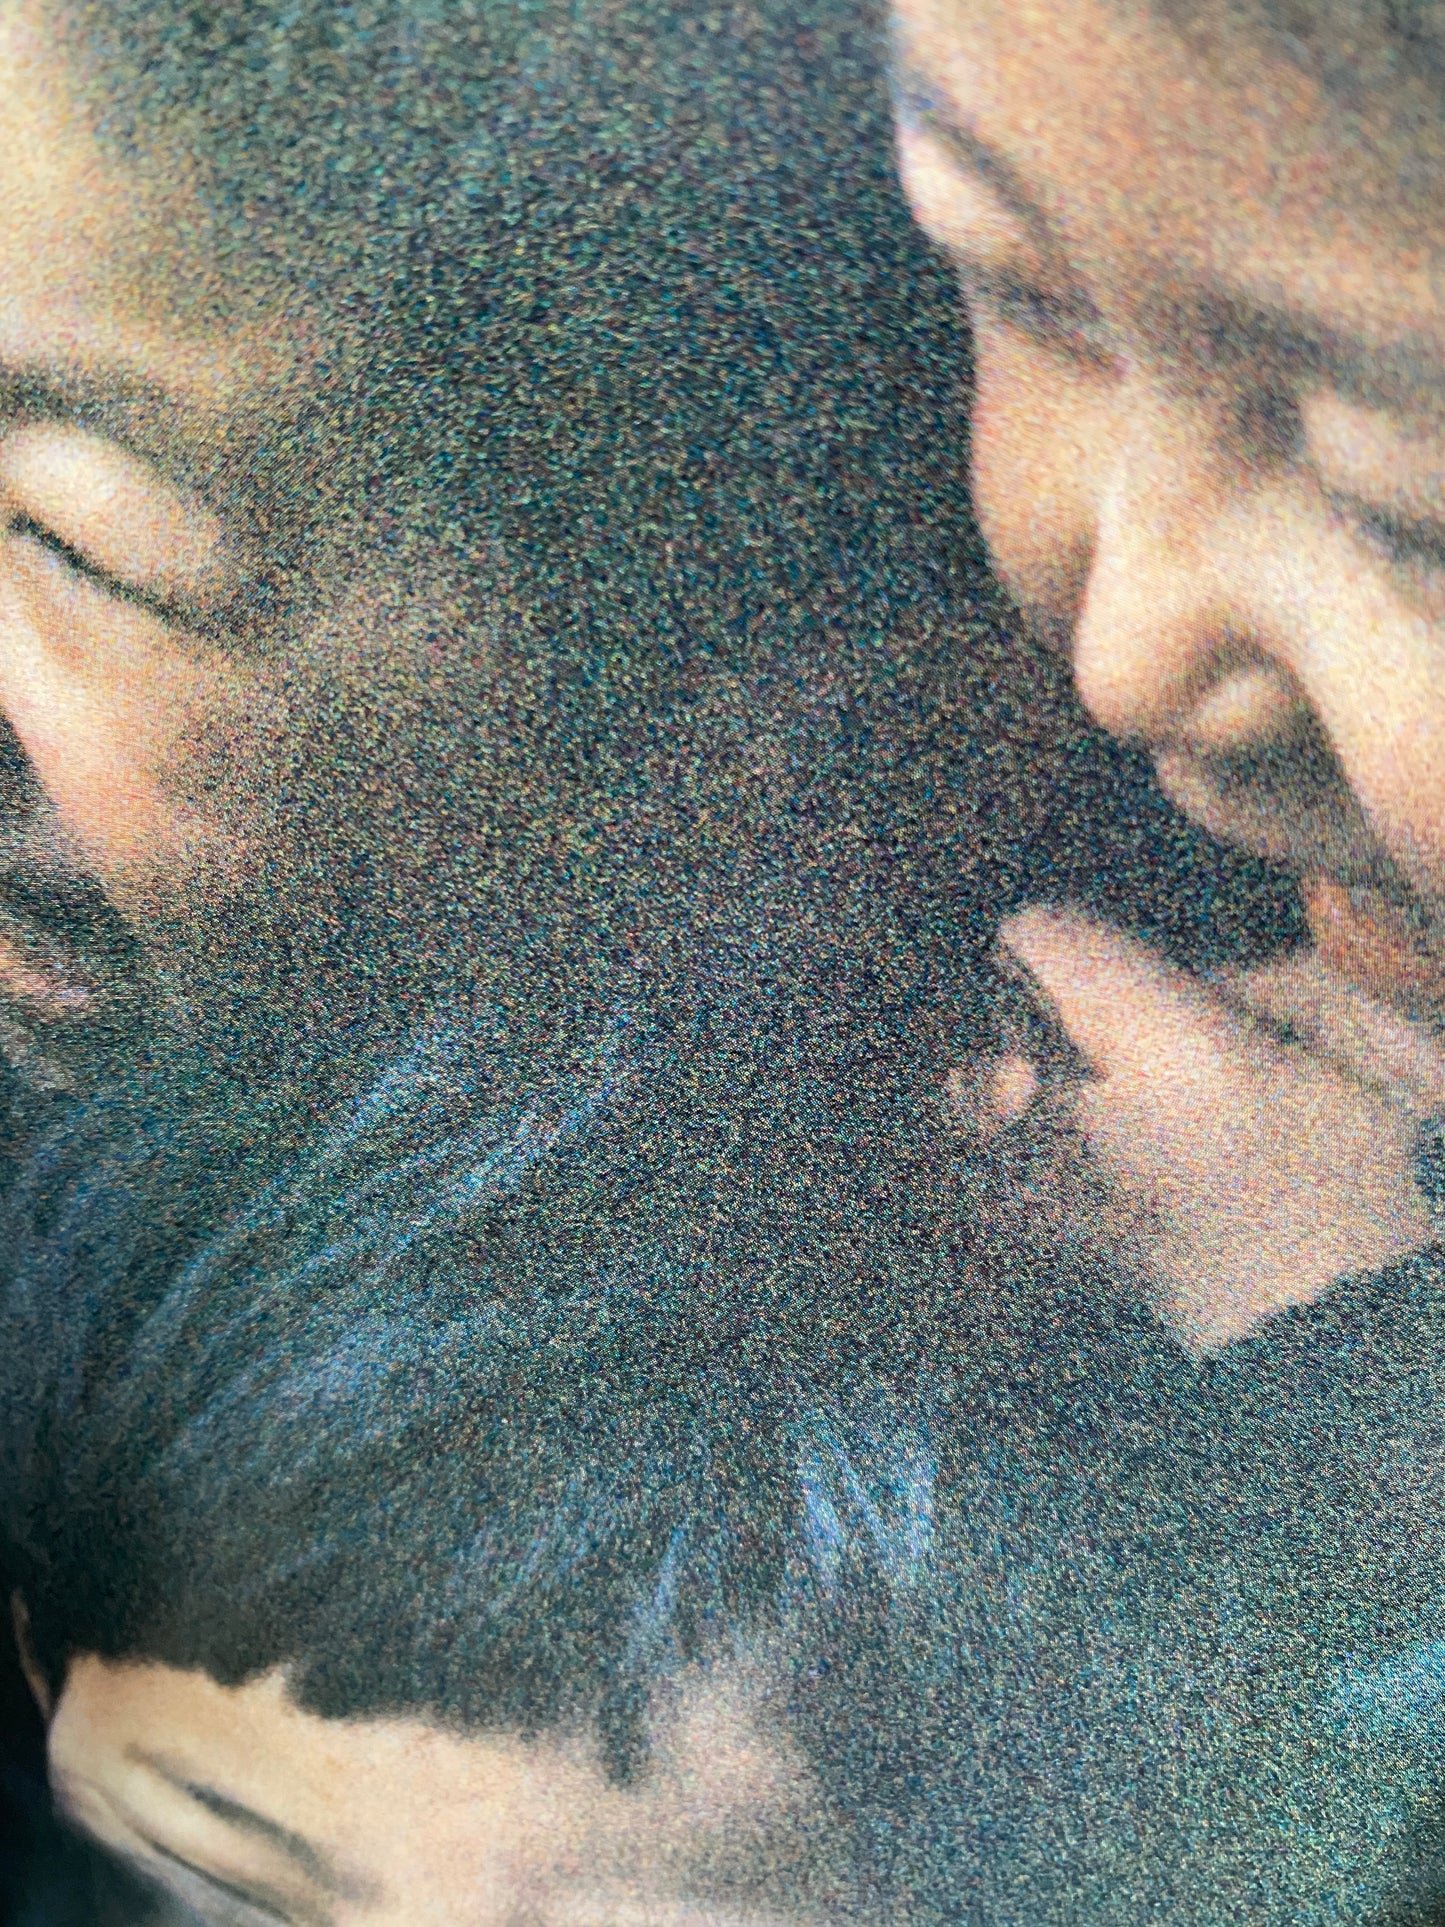 Nobuyoshi Araki - The Works of Nobuyoshi Araki / Satchin and His Brother Mabo (1997)